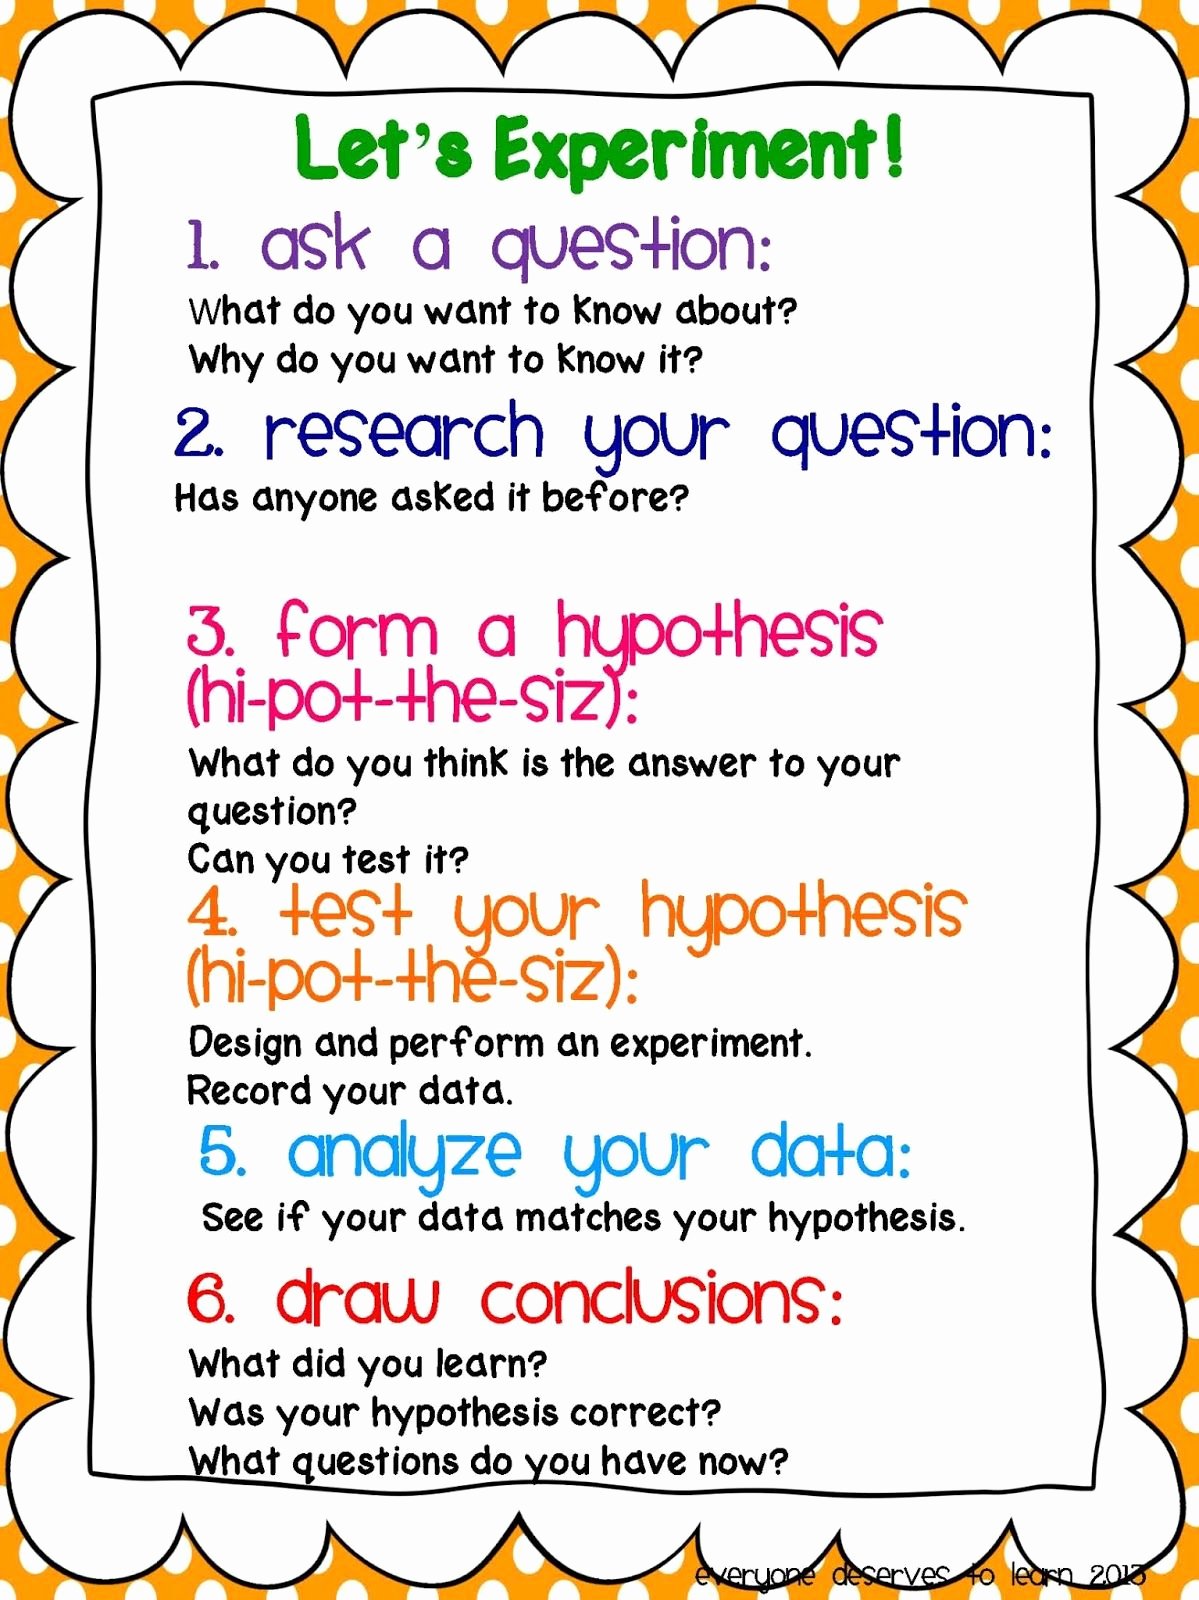 Scientific Method Worksheet Middle School Awesome Scientific Method for Kids